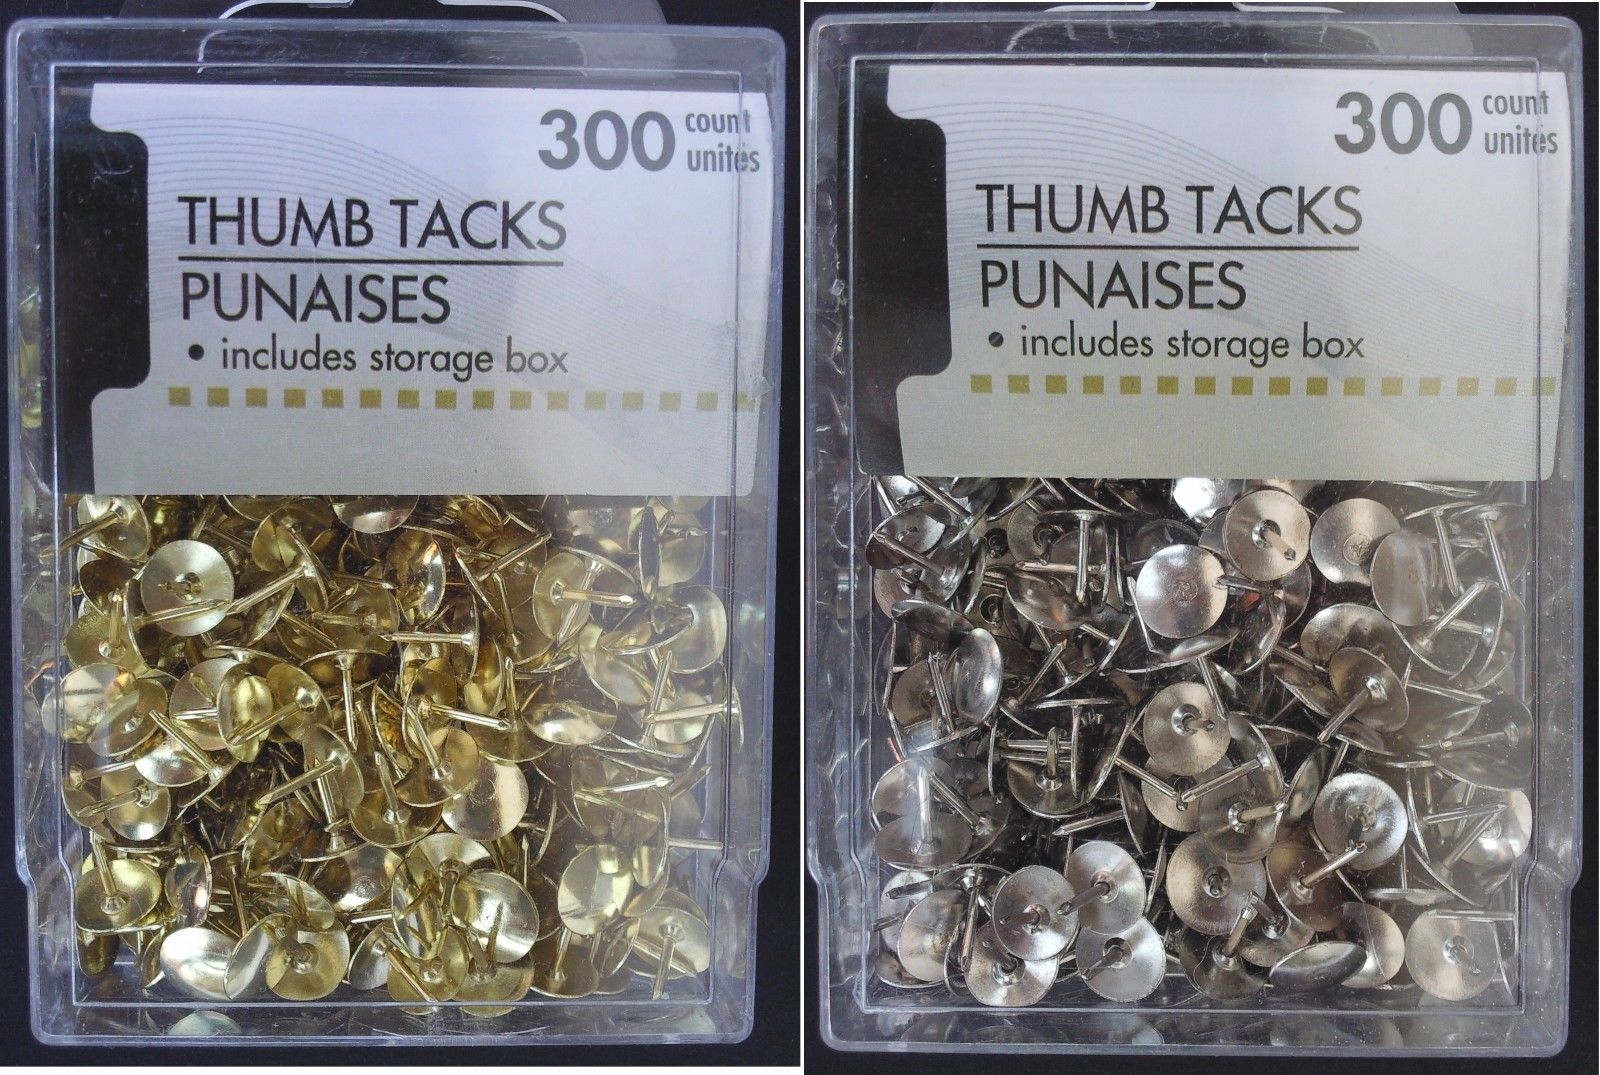 METAL THUMB TACKS IN SNAP-LOCK STORAGE BOX Select Gold or Silver 300 Count/Box - $2.99